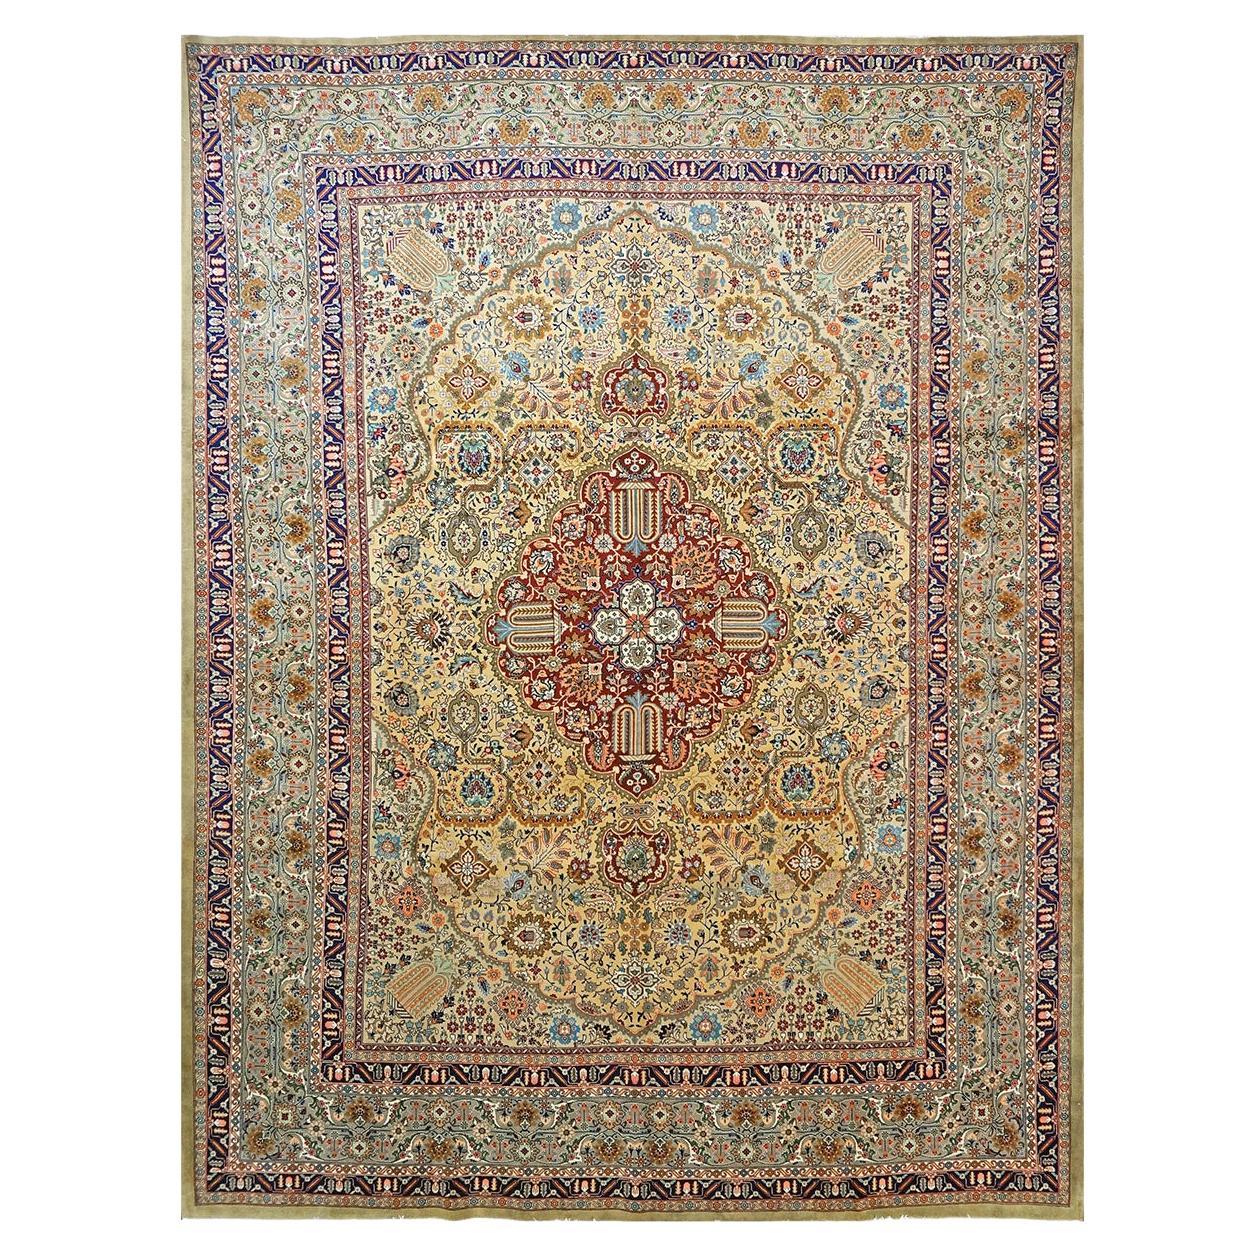 Antiker persischer Täbris 10x13 Tan, Taupe, Marine & Gold Handgefertigter Teppich